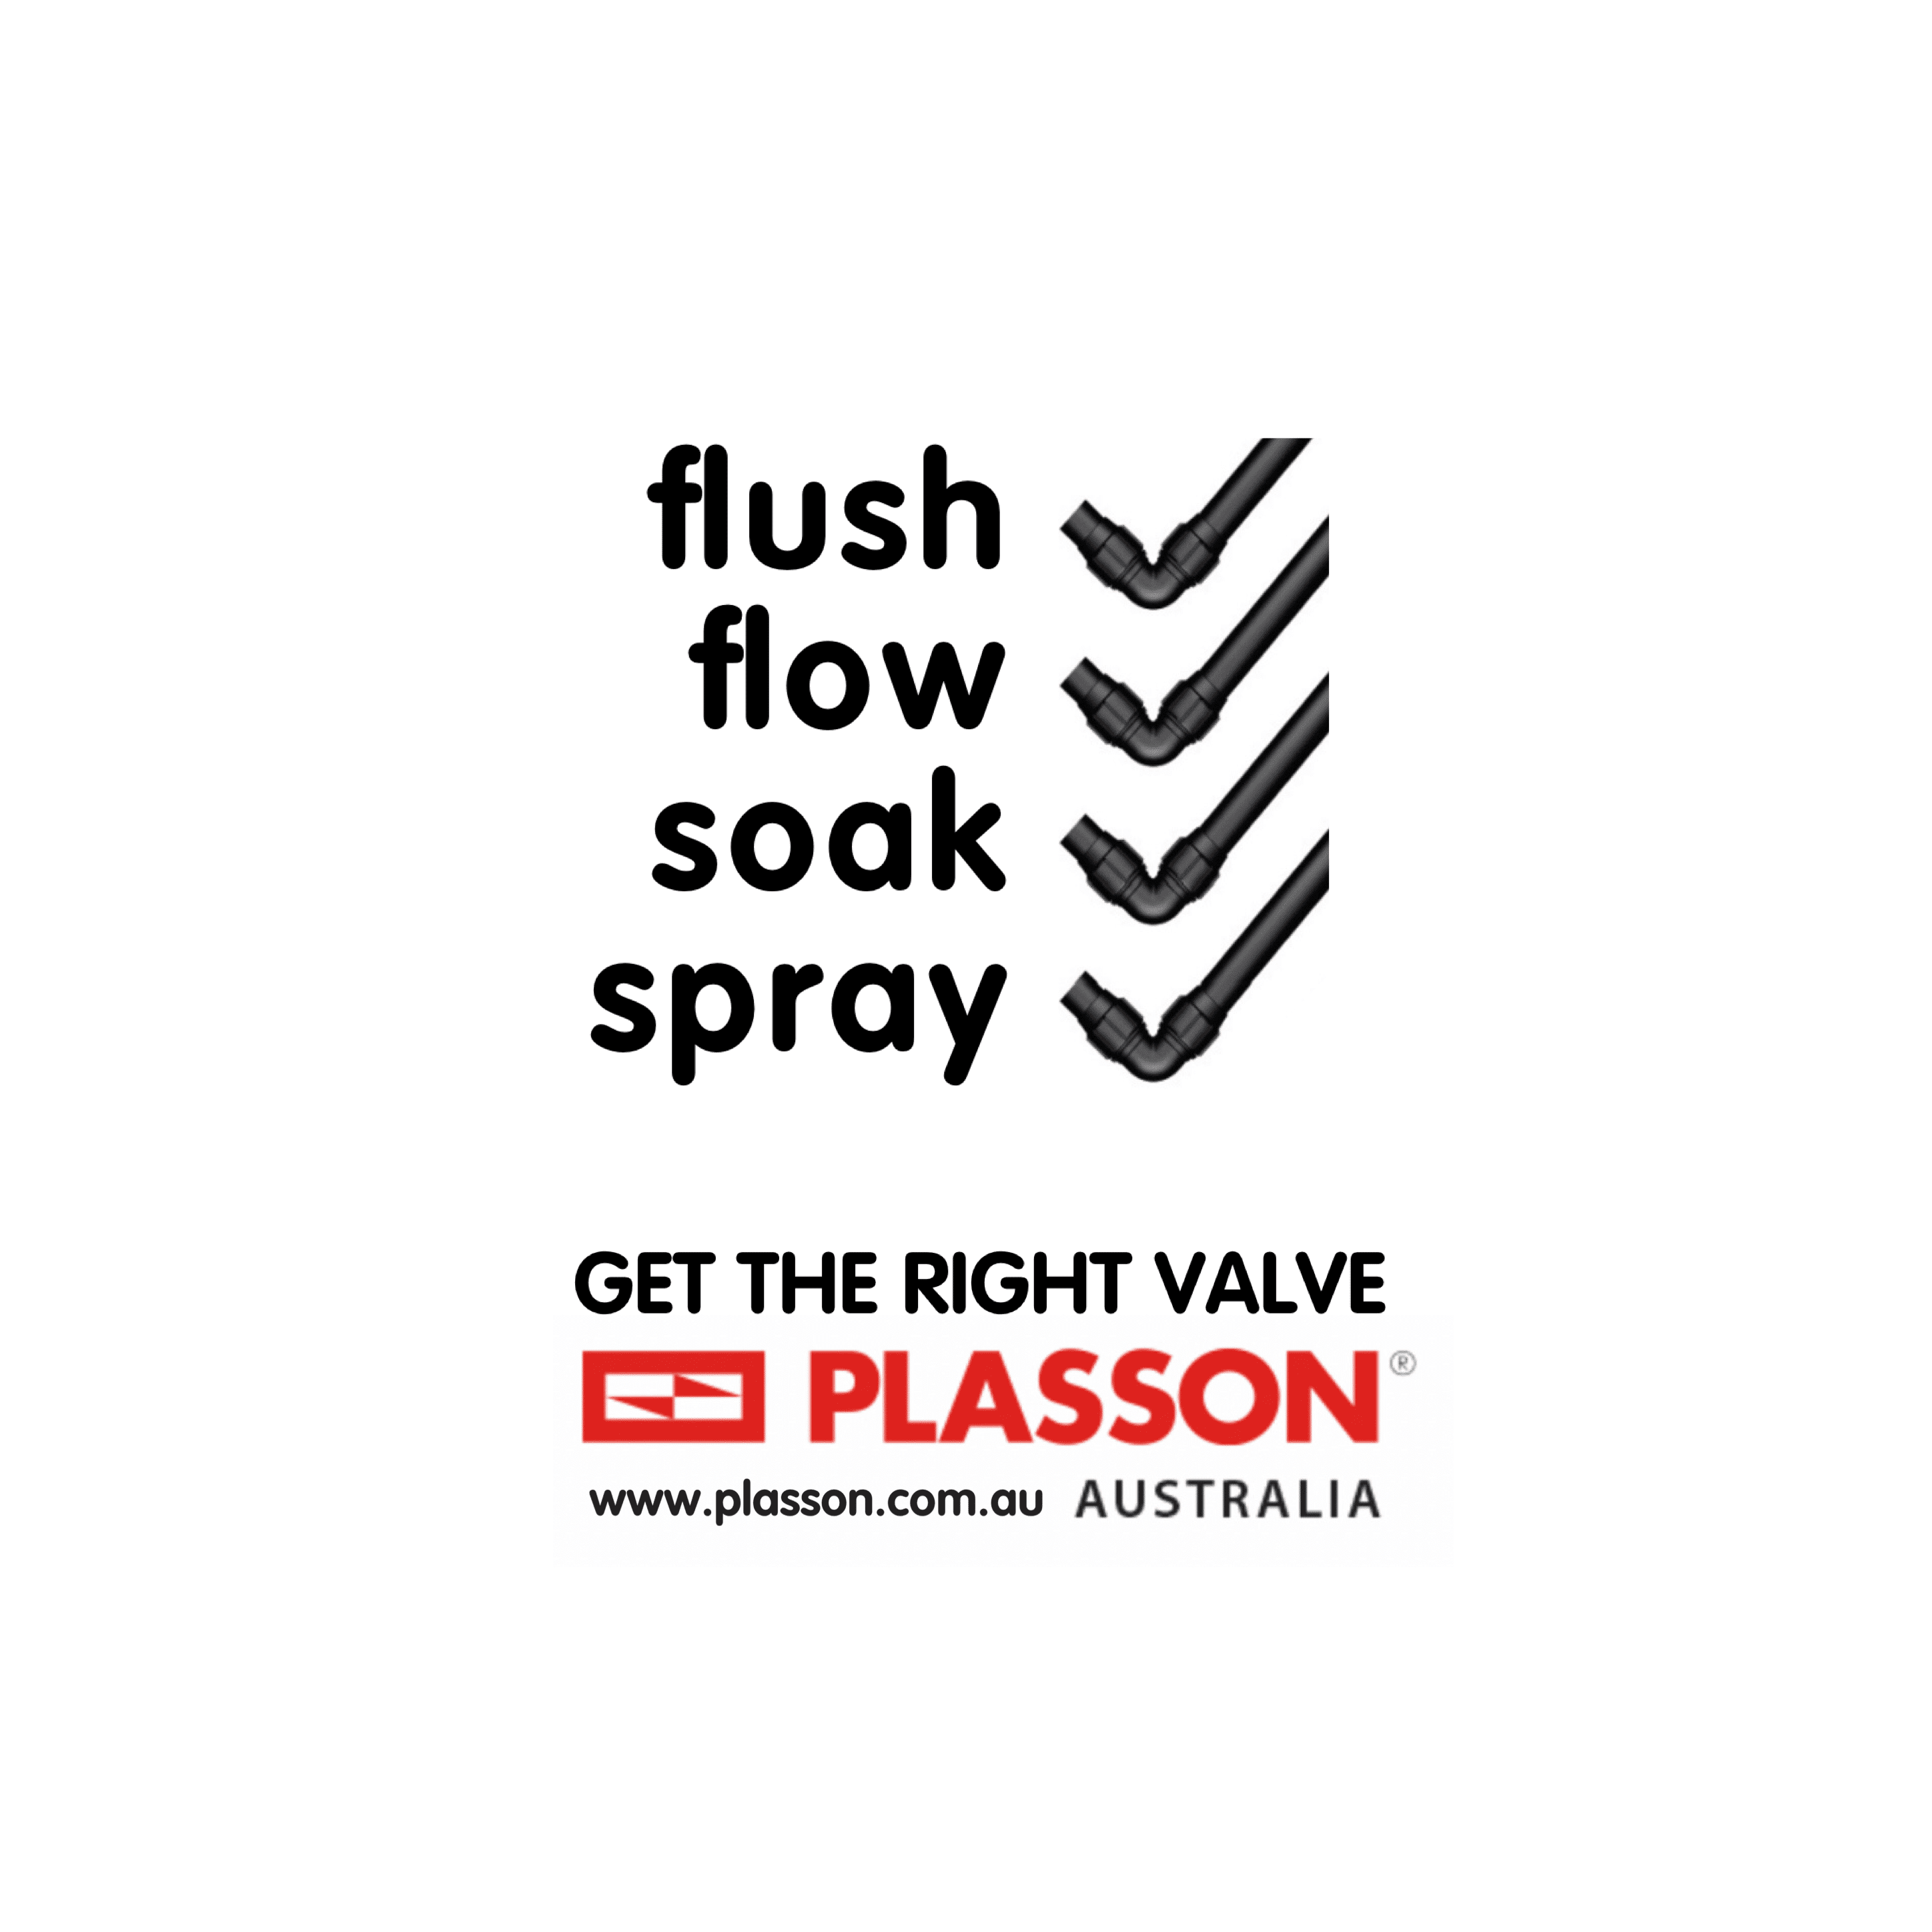 Plasson Australia has simply smart valves to stop and go the flow